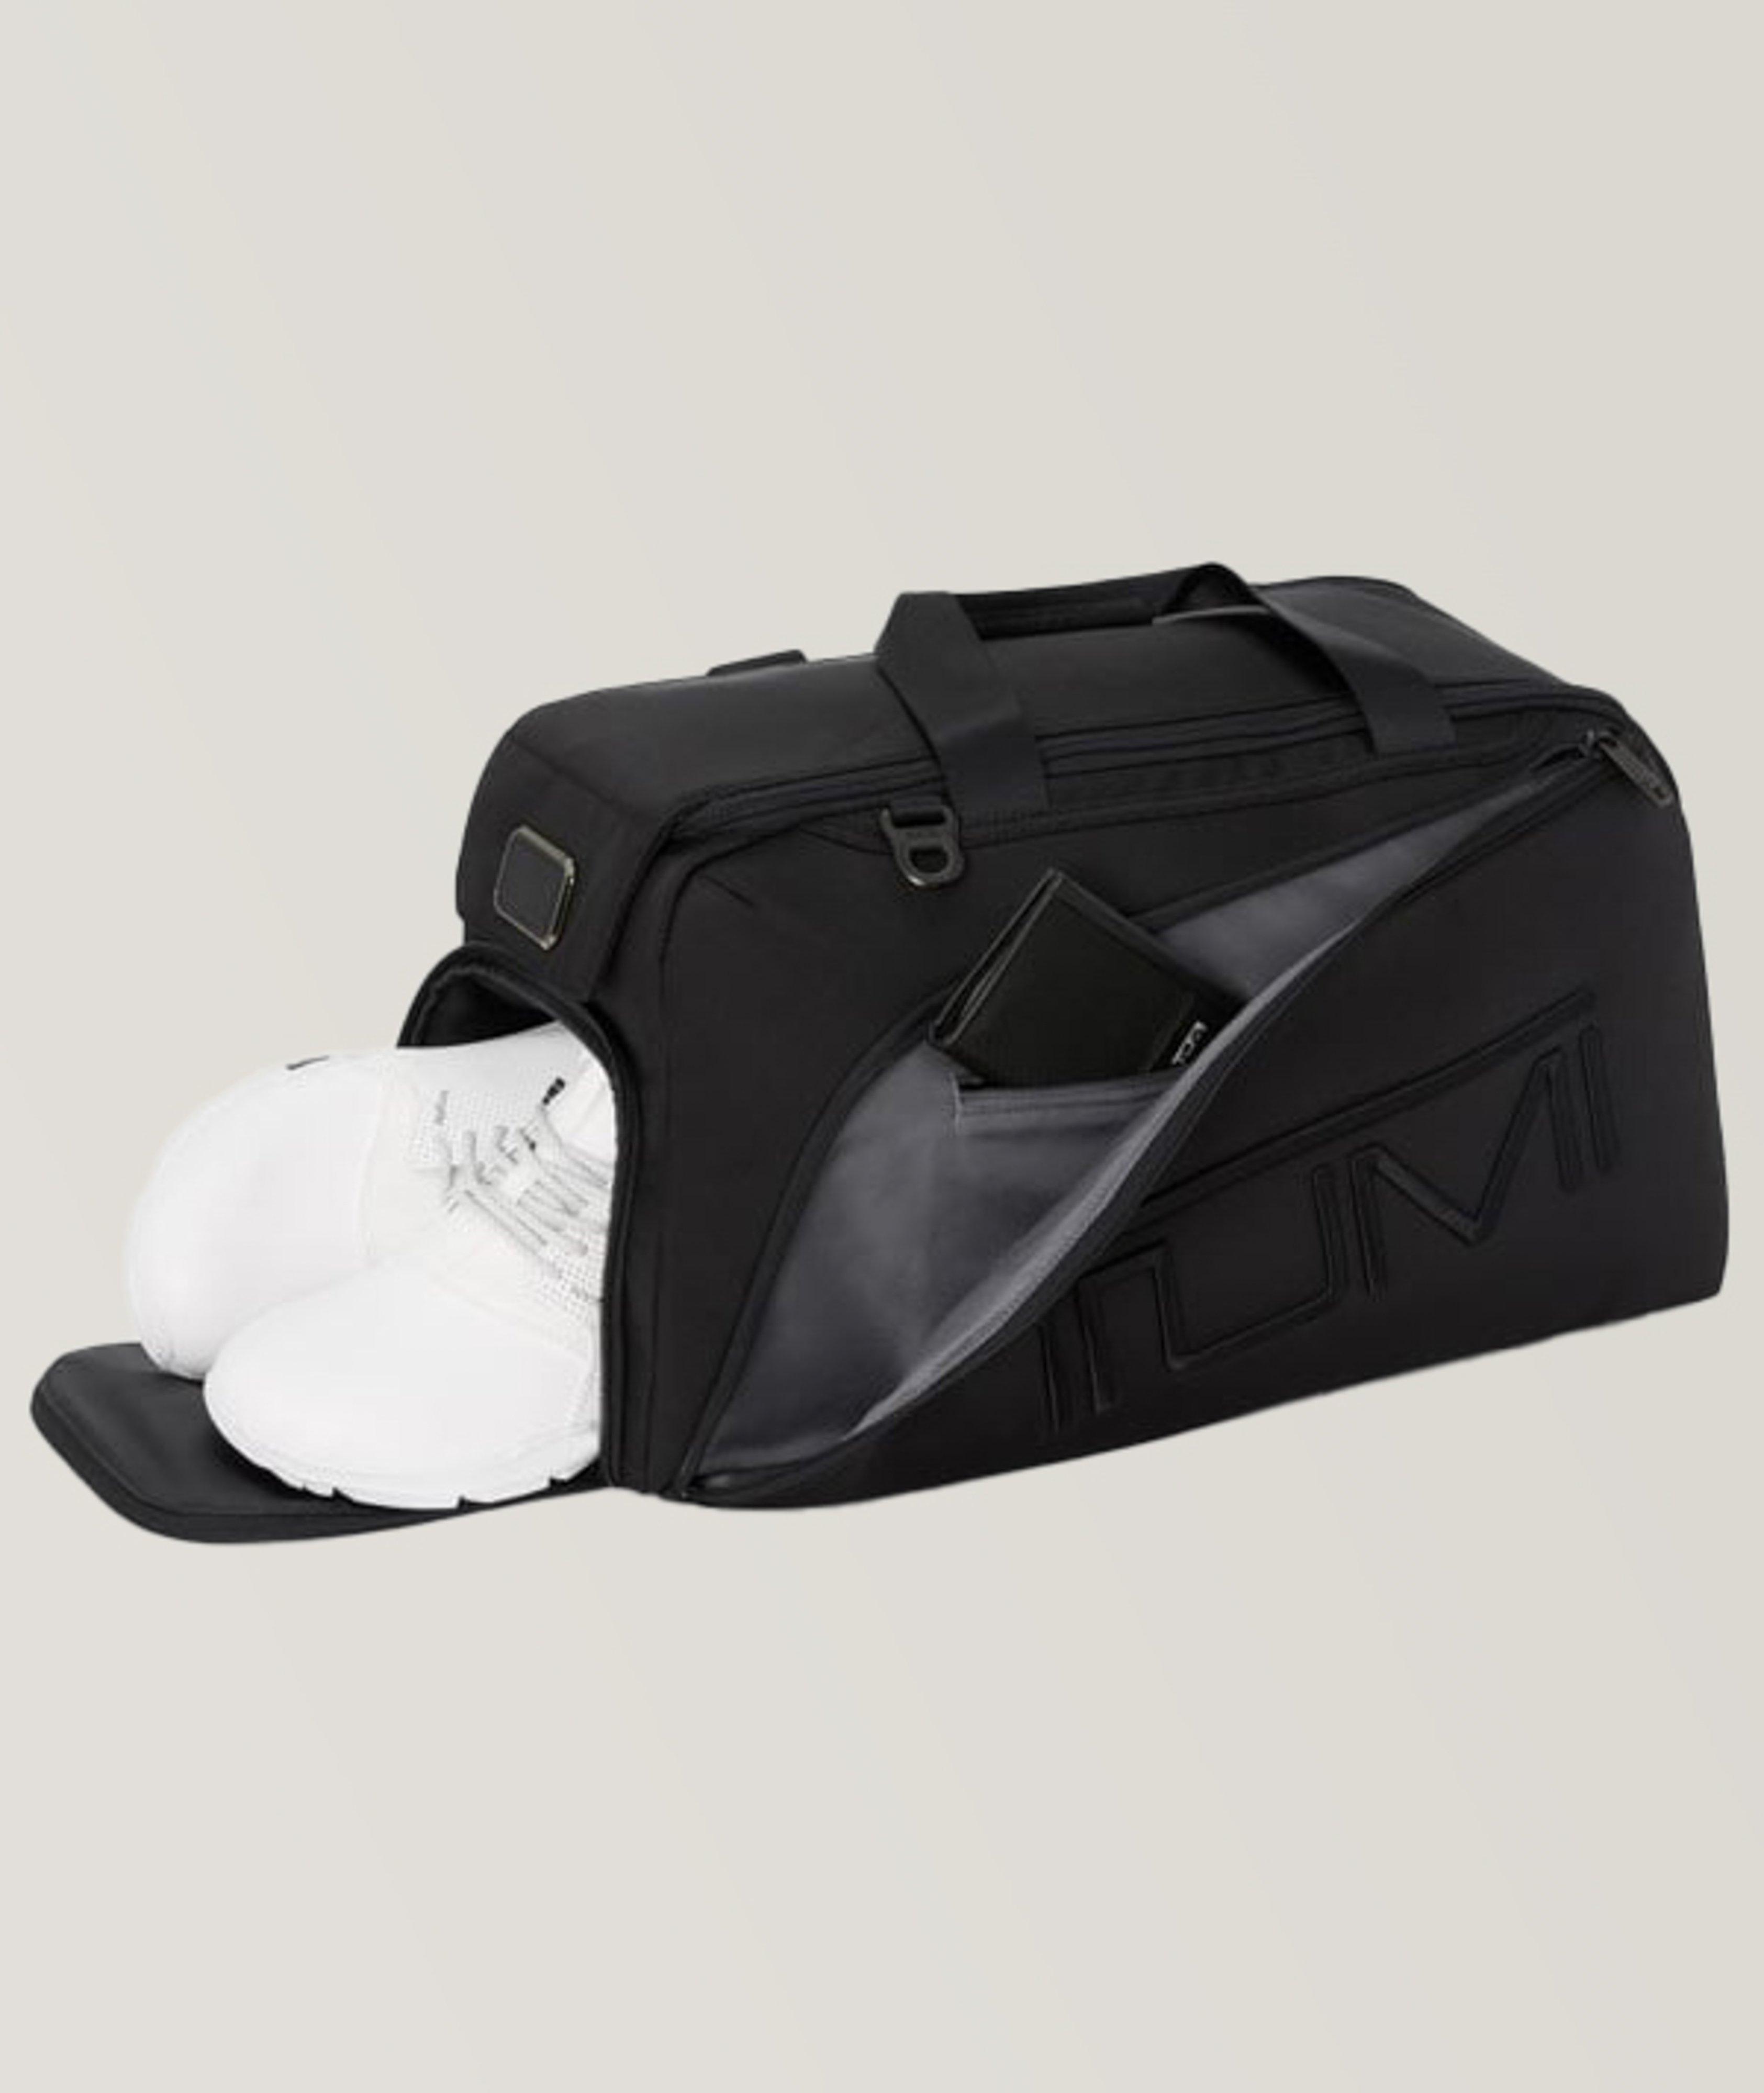 Alpha 3 Golf Duffle Bag 